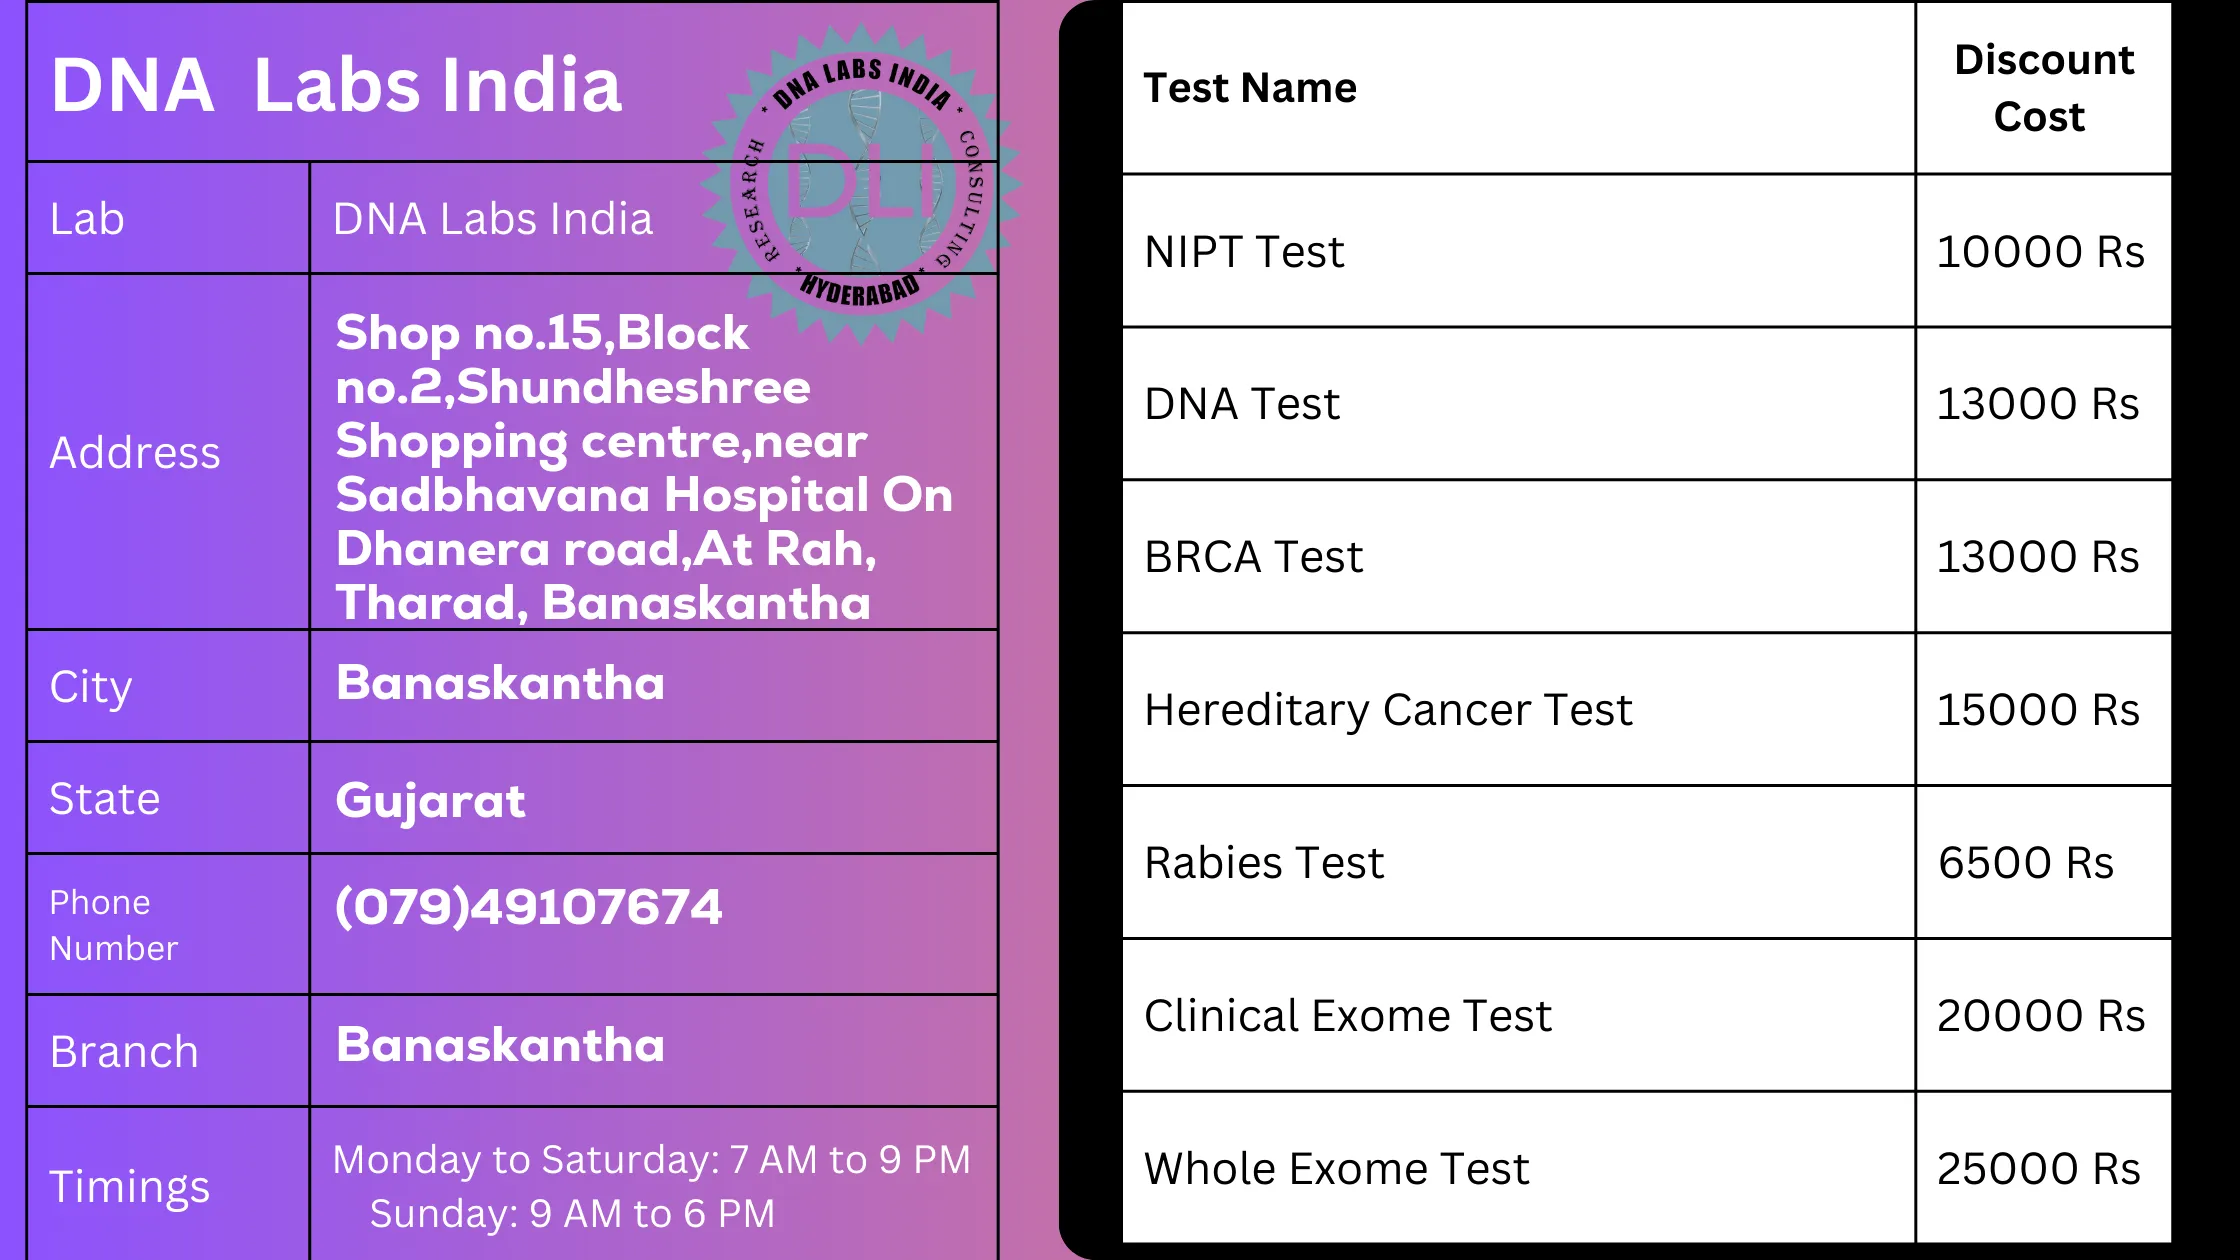 DNA Labs India in Banaskantha - Get 20% Off on Tests